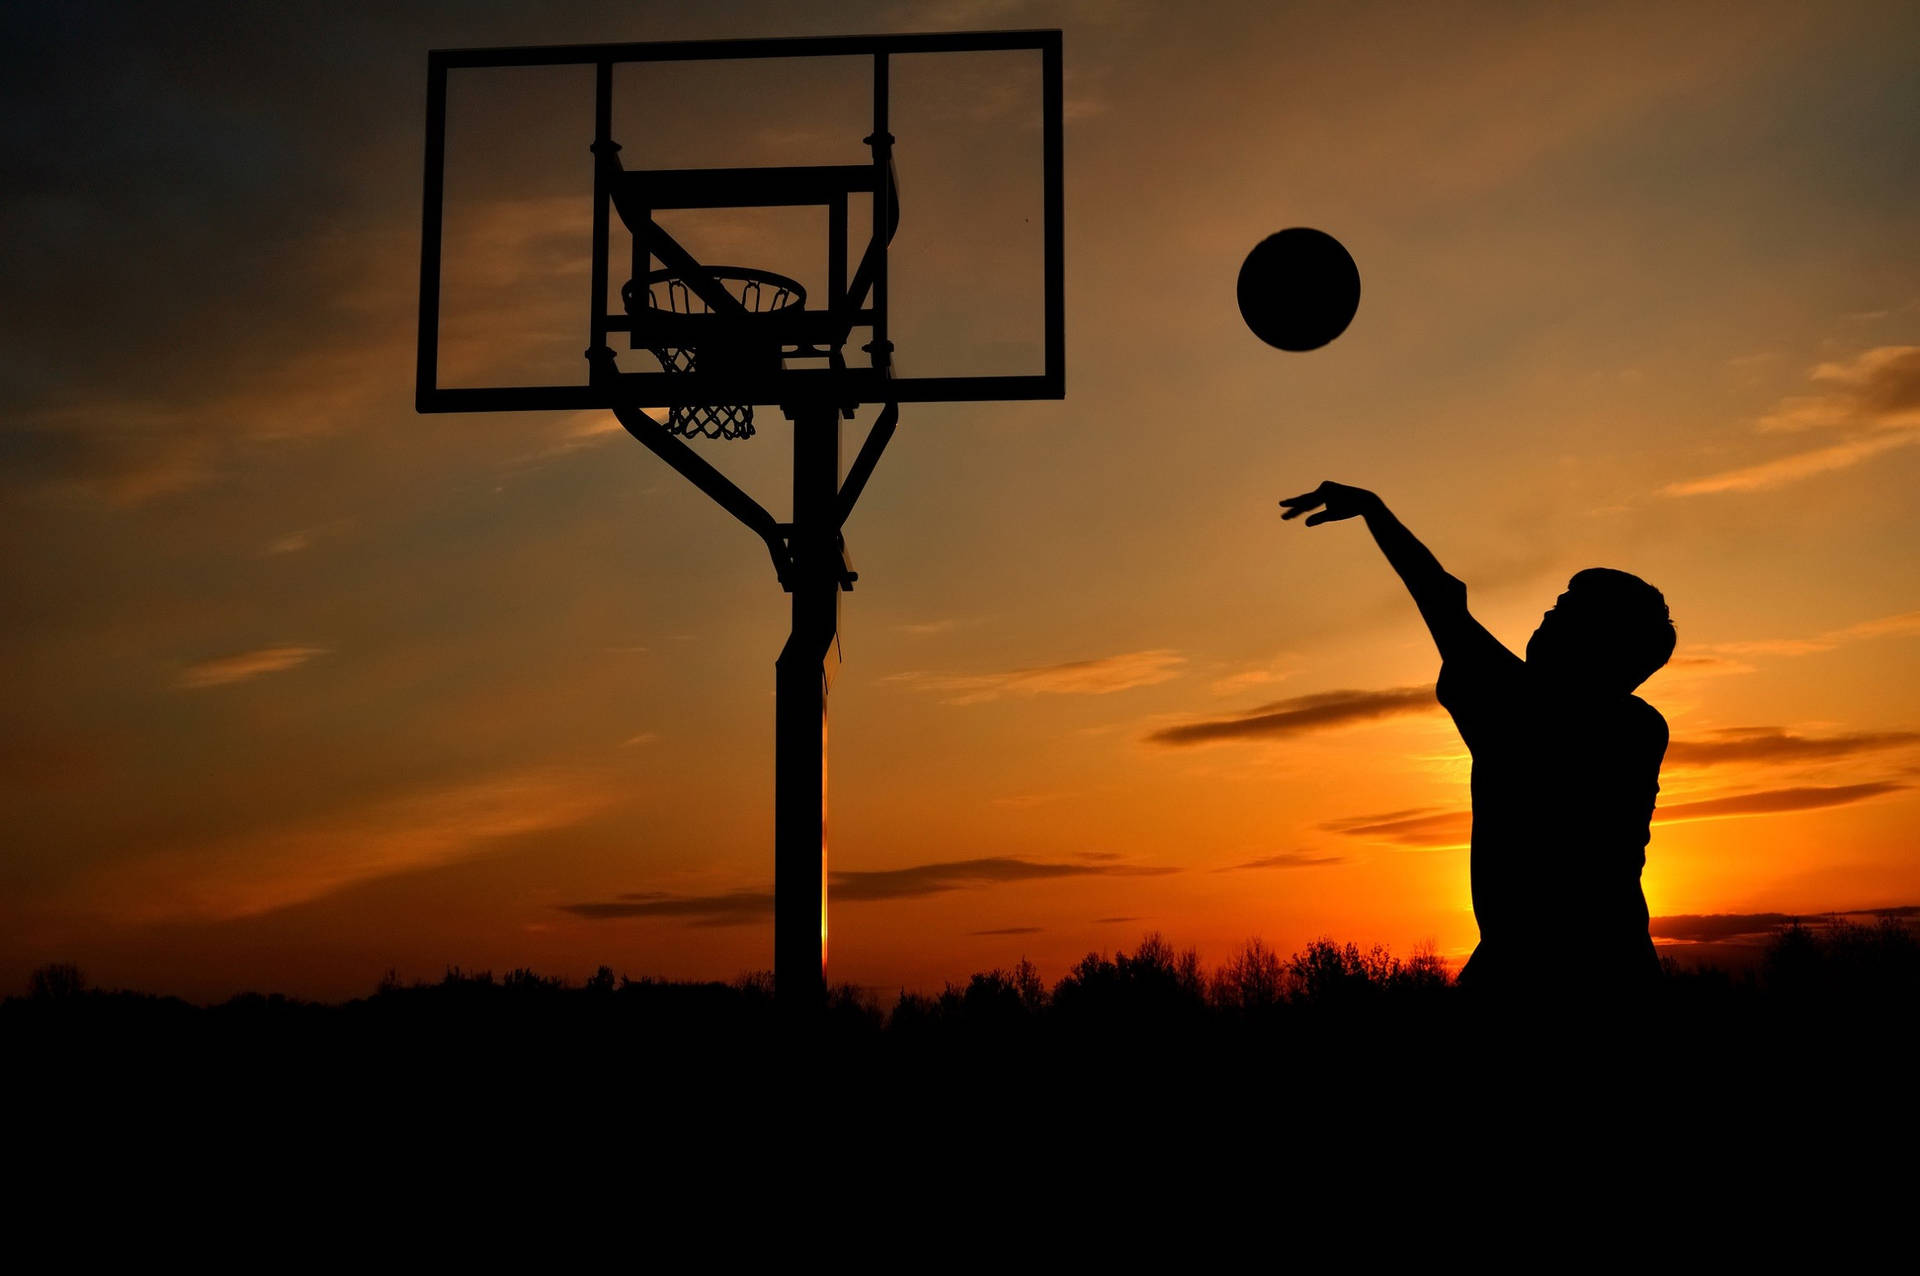 Basketballplatzspielerim Sonnenuntergang Wallpaper